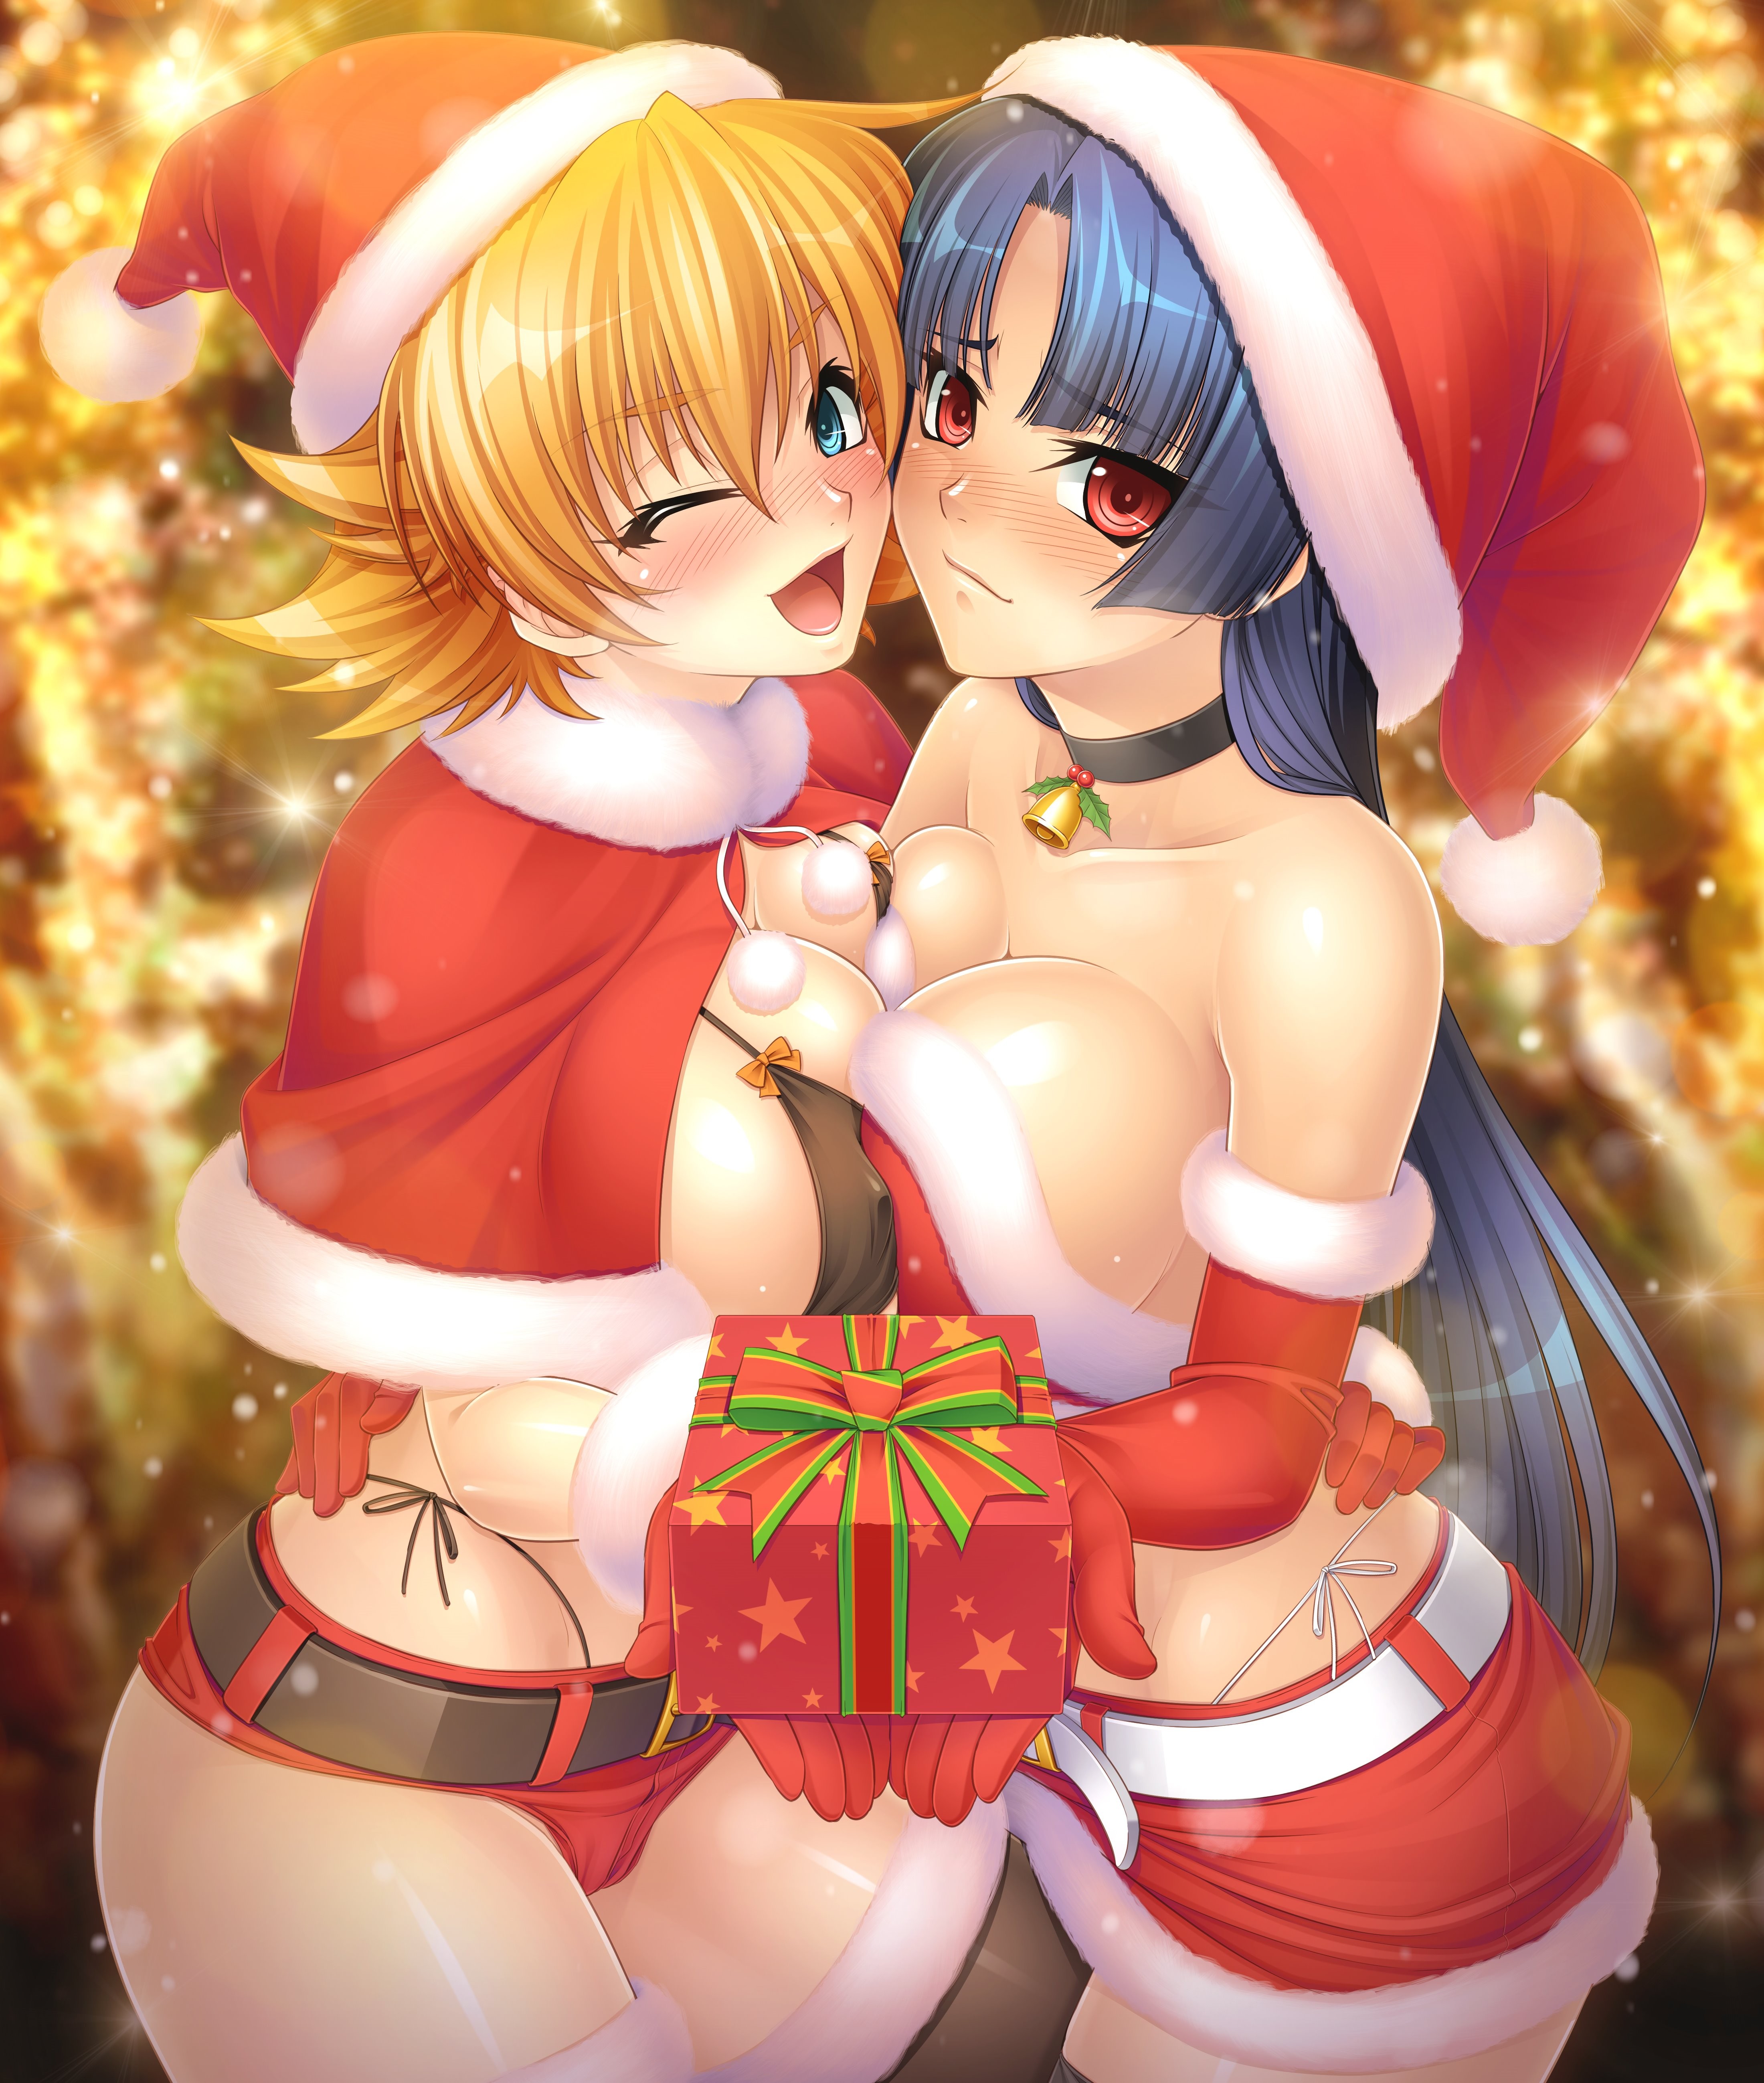 Anime 4400x5196 Taimanin Asagi Igawa Sakura bikini cleavage Christmas anime girls anime boobs big boobs open mouth Santa hats red eyes one eye closed curvy Christmas Lingerie lingerie boobs on boobs two women